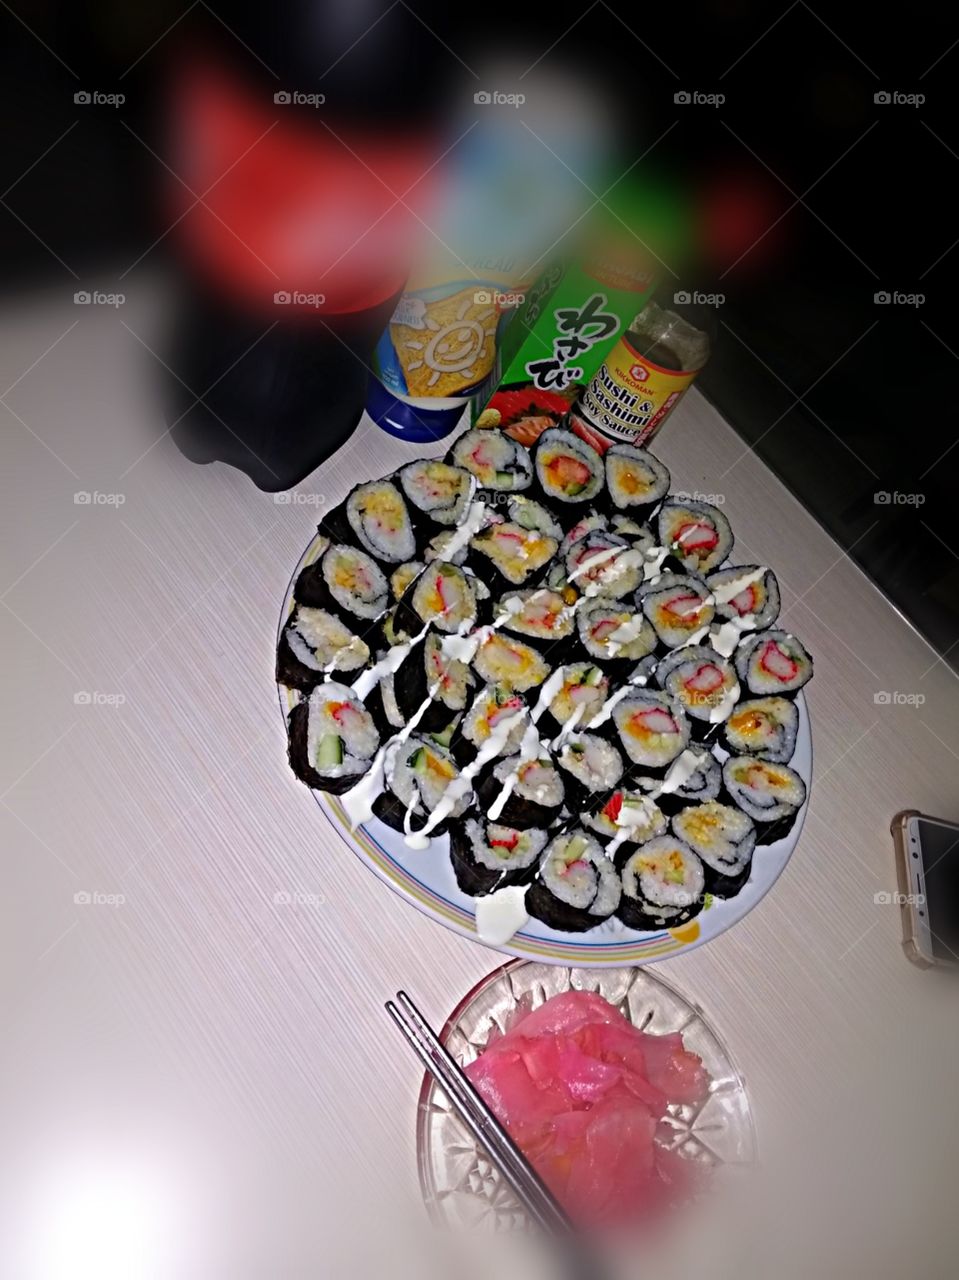 sushi rumble! 🍣